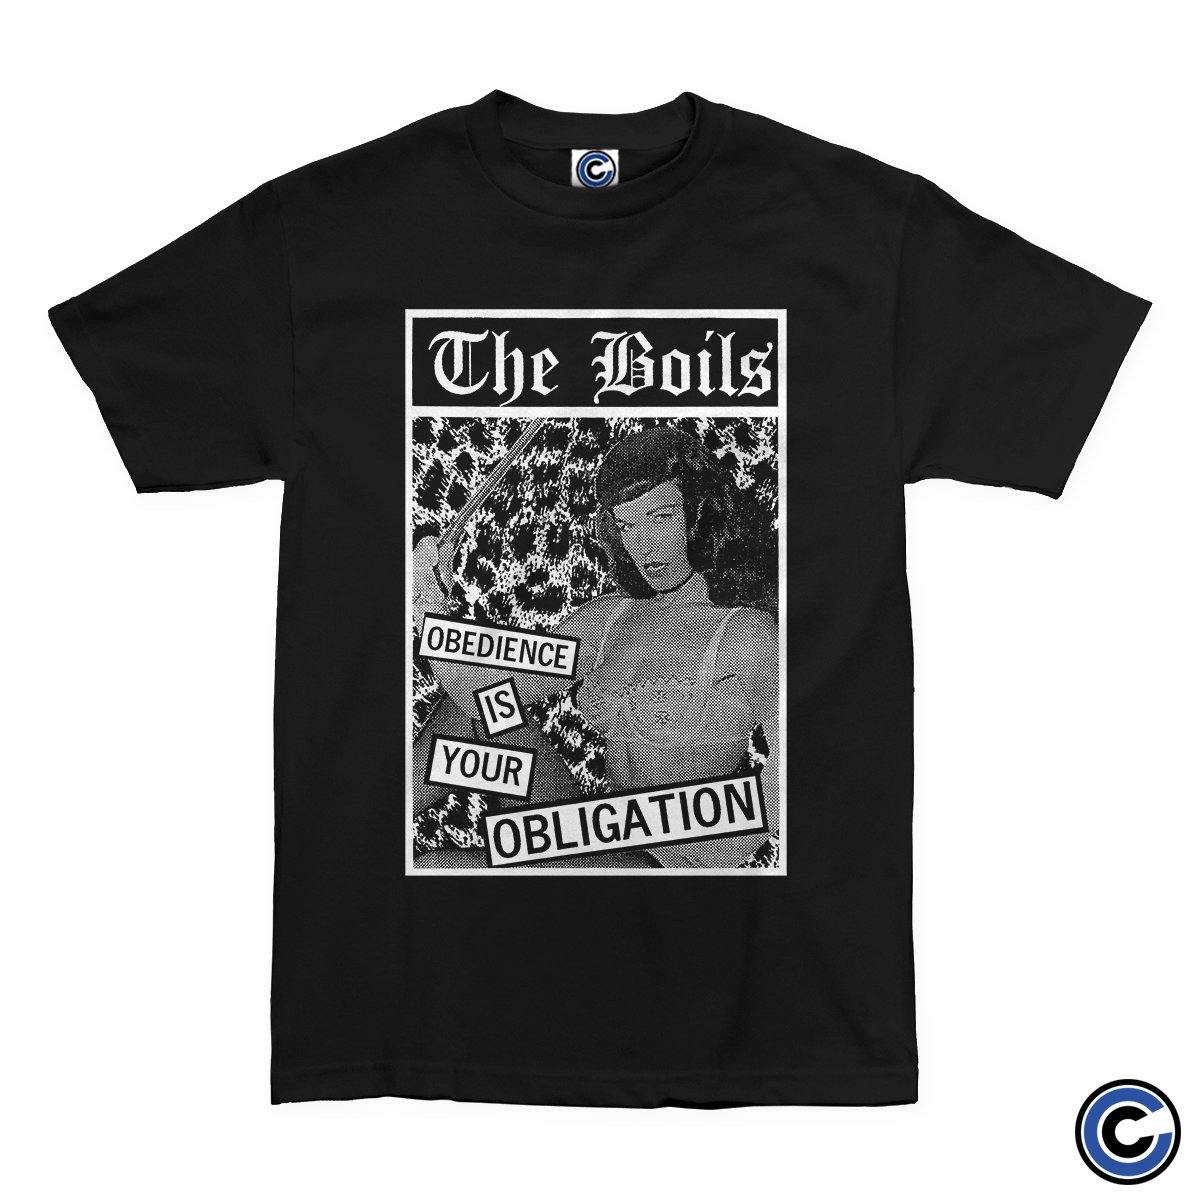 Buy – The Boils "Obligation" Shirt – Band & Music Merch – Cold Cuts Merch